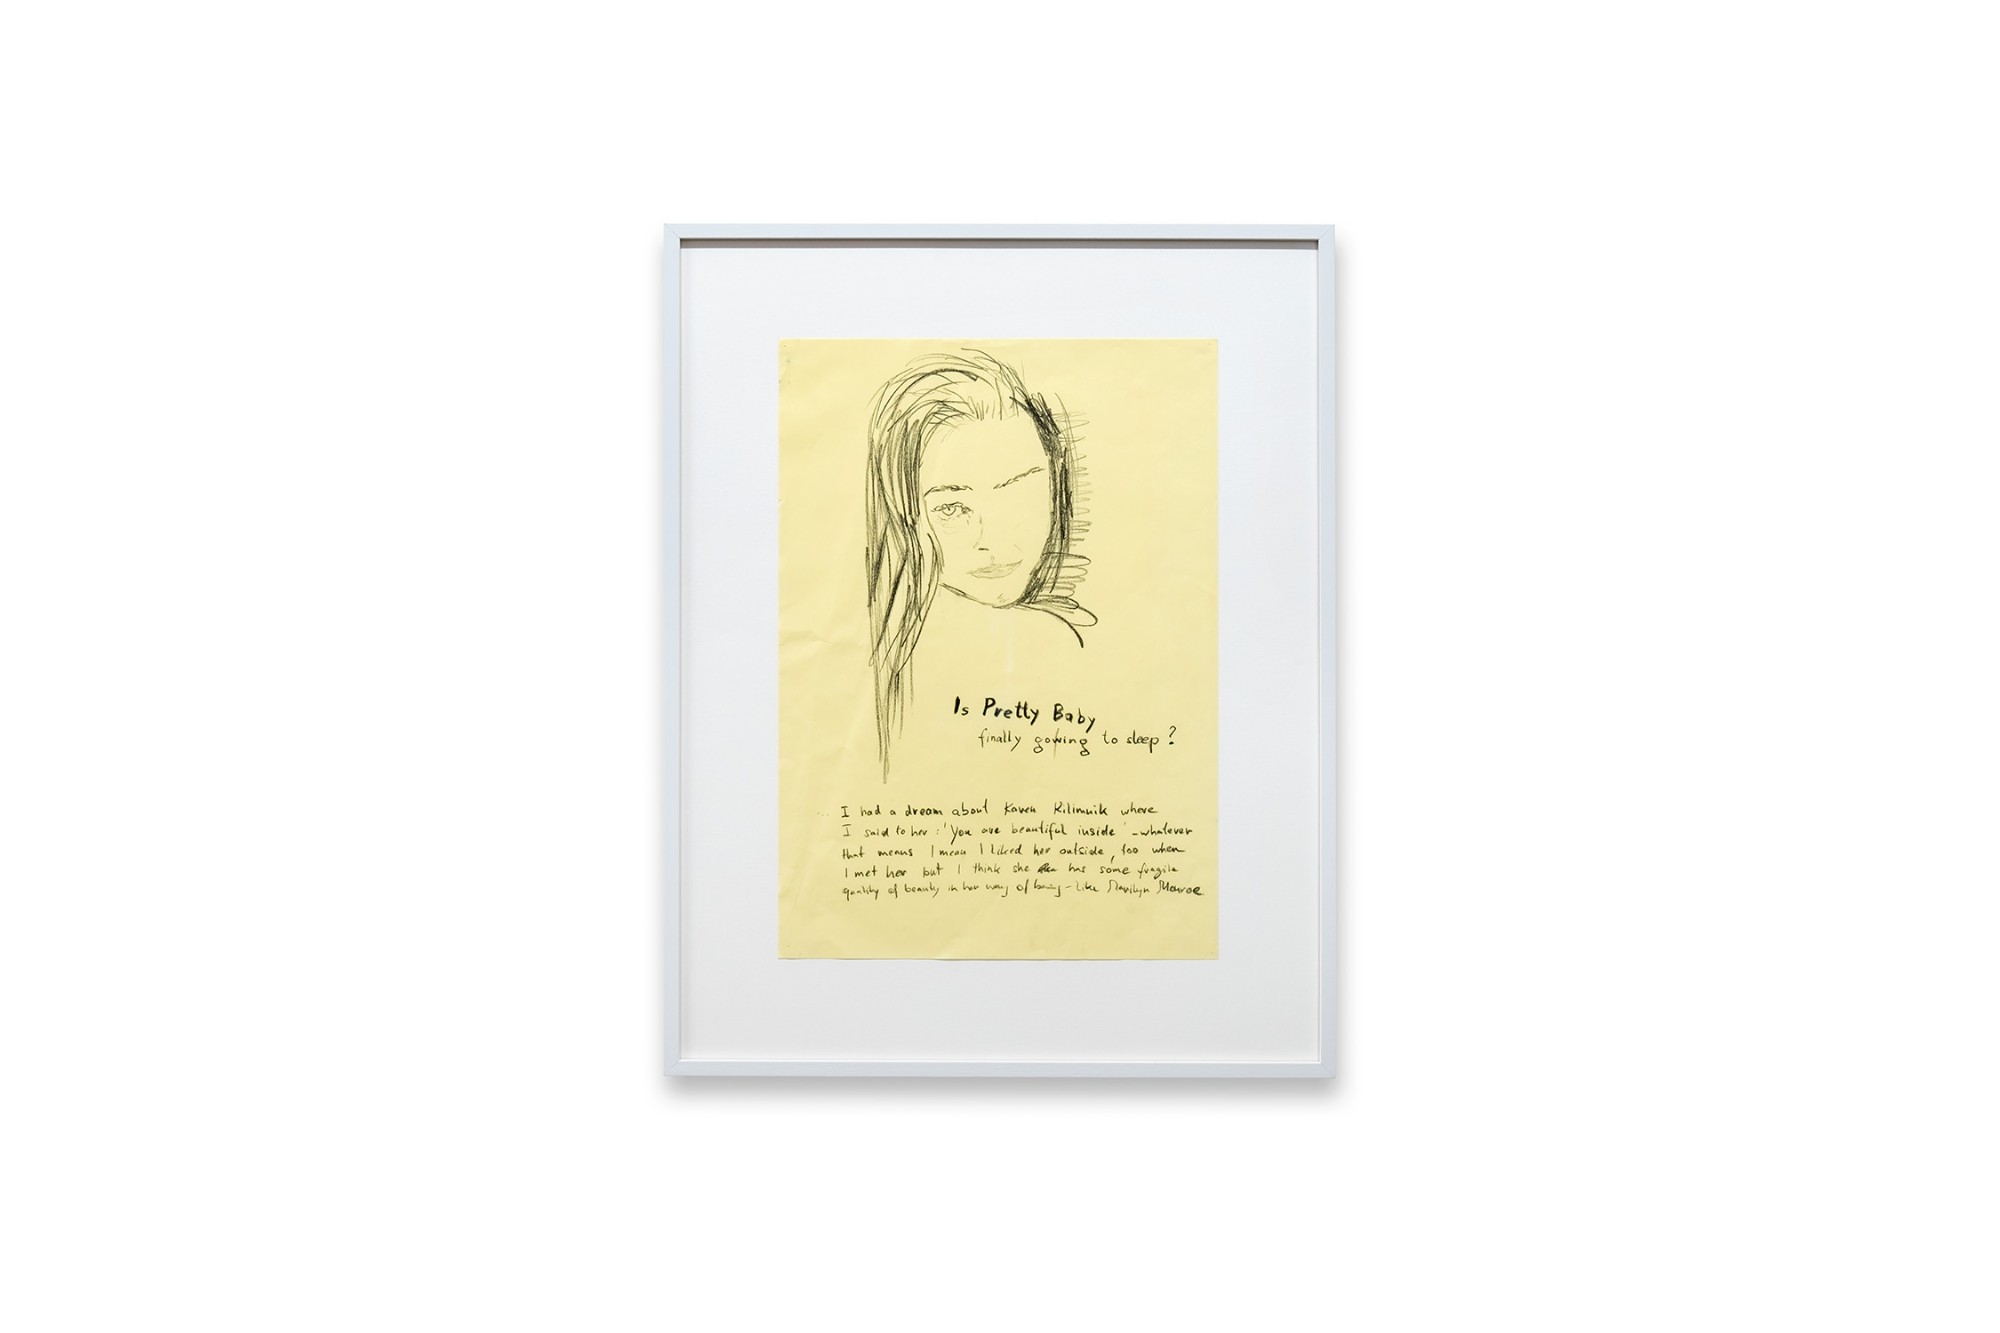 Elke Silvia Krystufek, Is Pretty Baby, 2018, pencil on paper, 42 x 29,5 cm